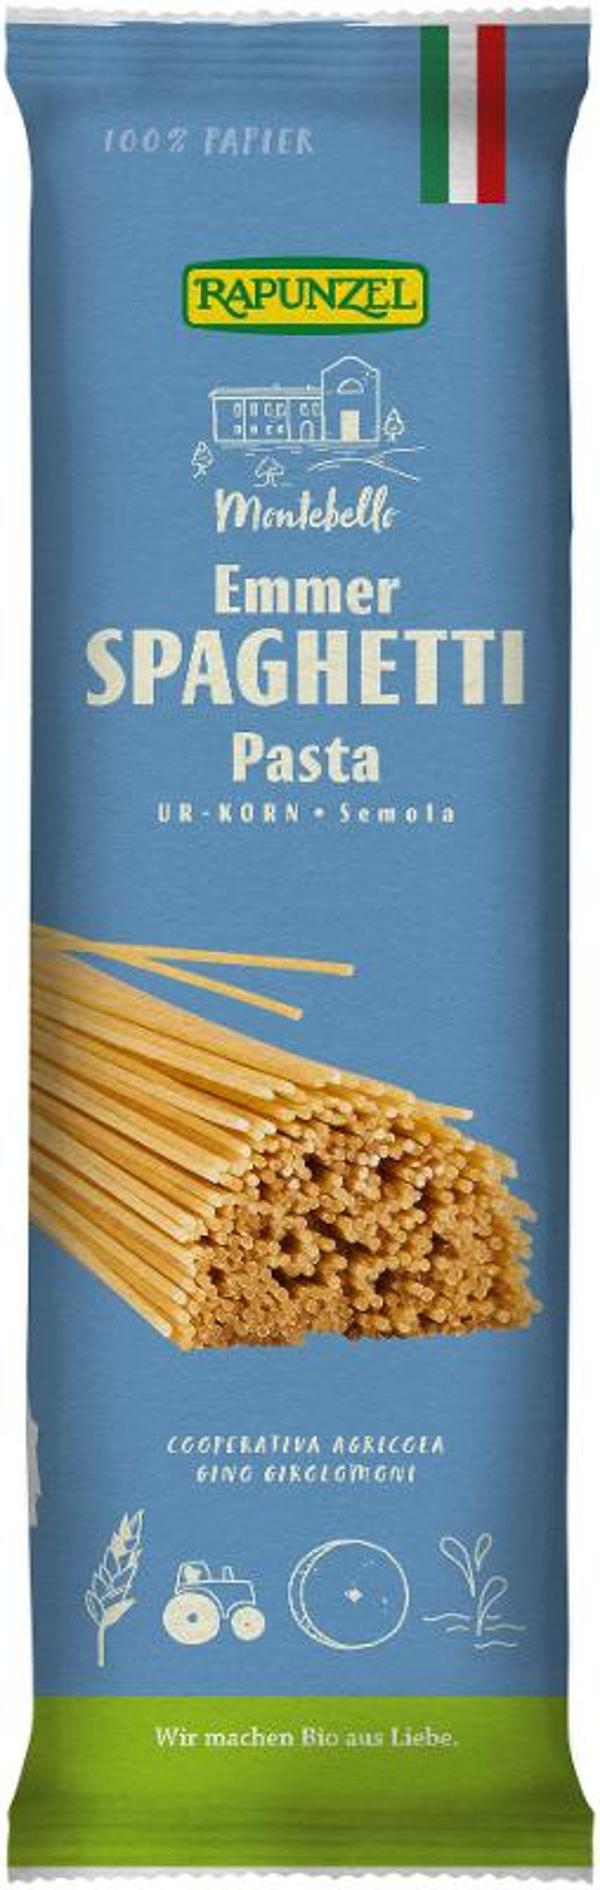 Produktfoto zu Rapunzel Emmer-Spaghetti - 500g